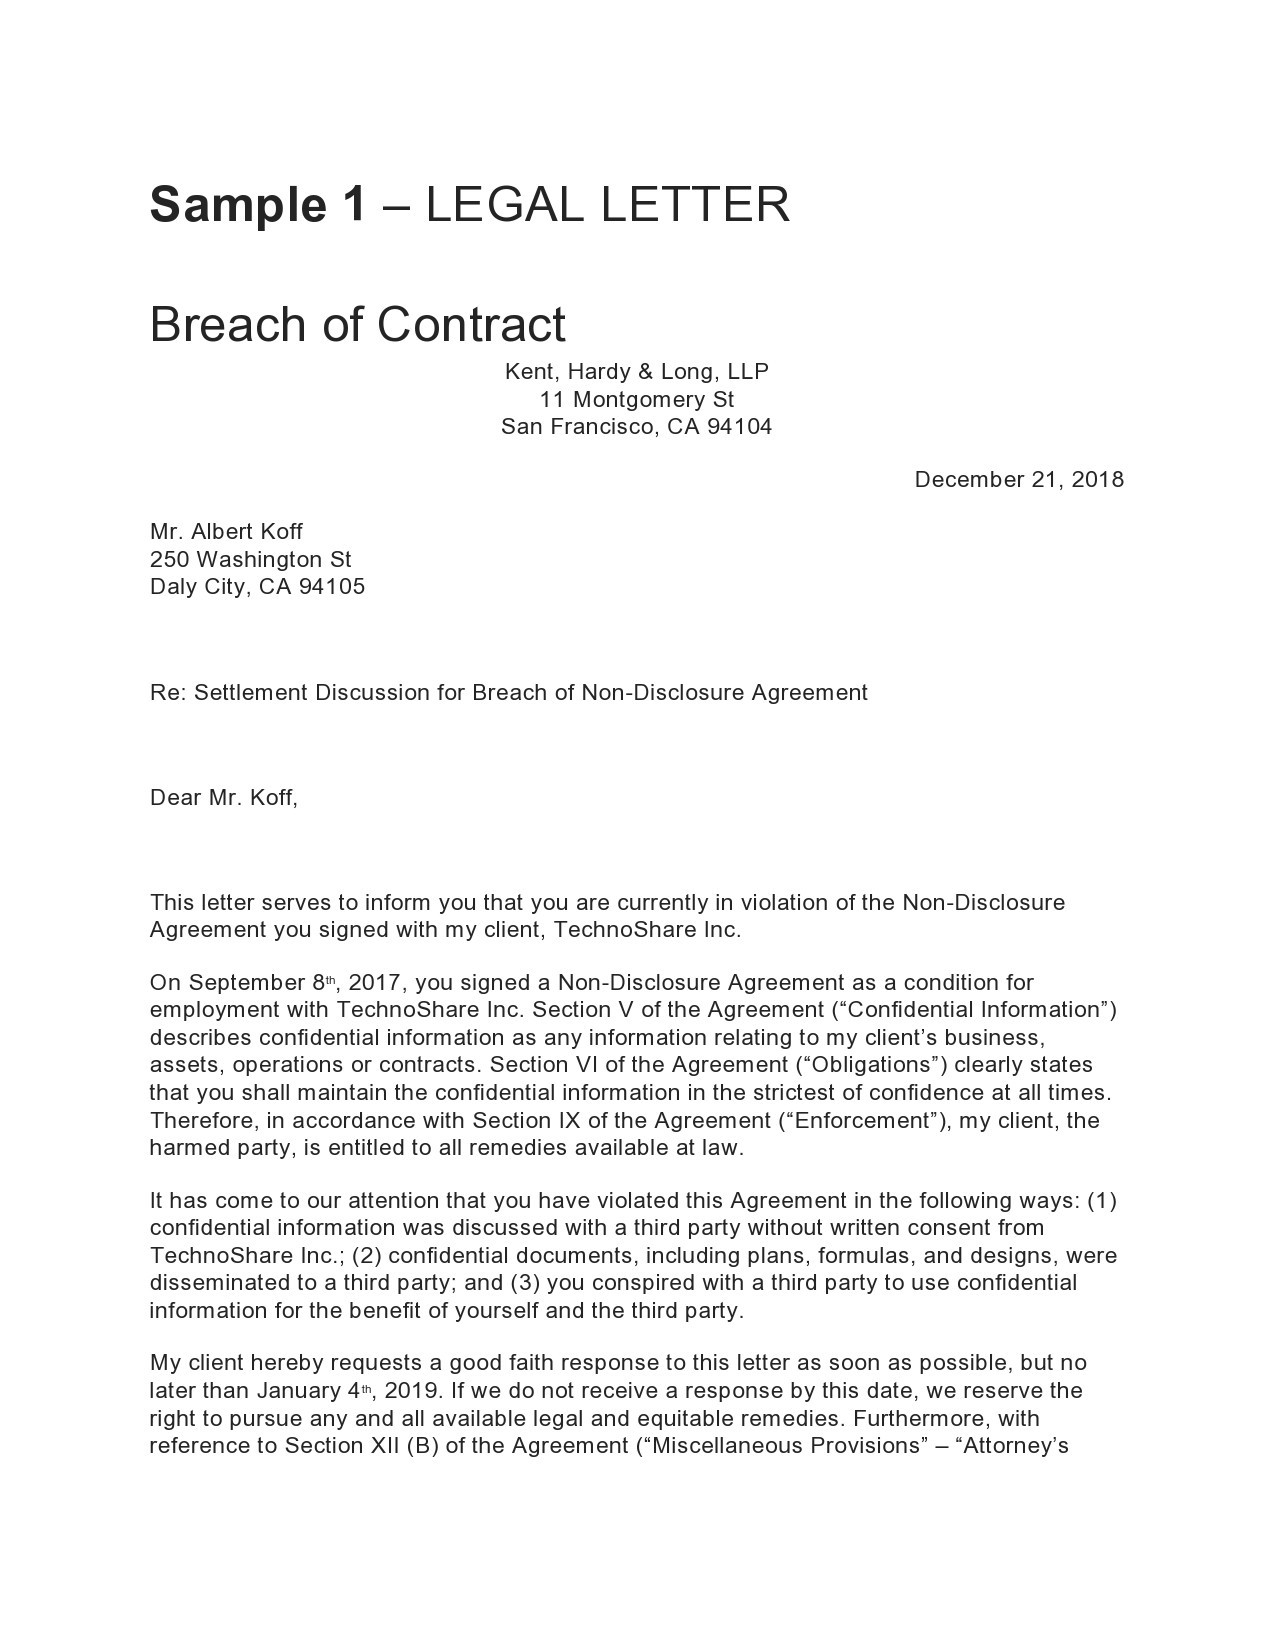 Free legal letter format 36